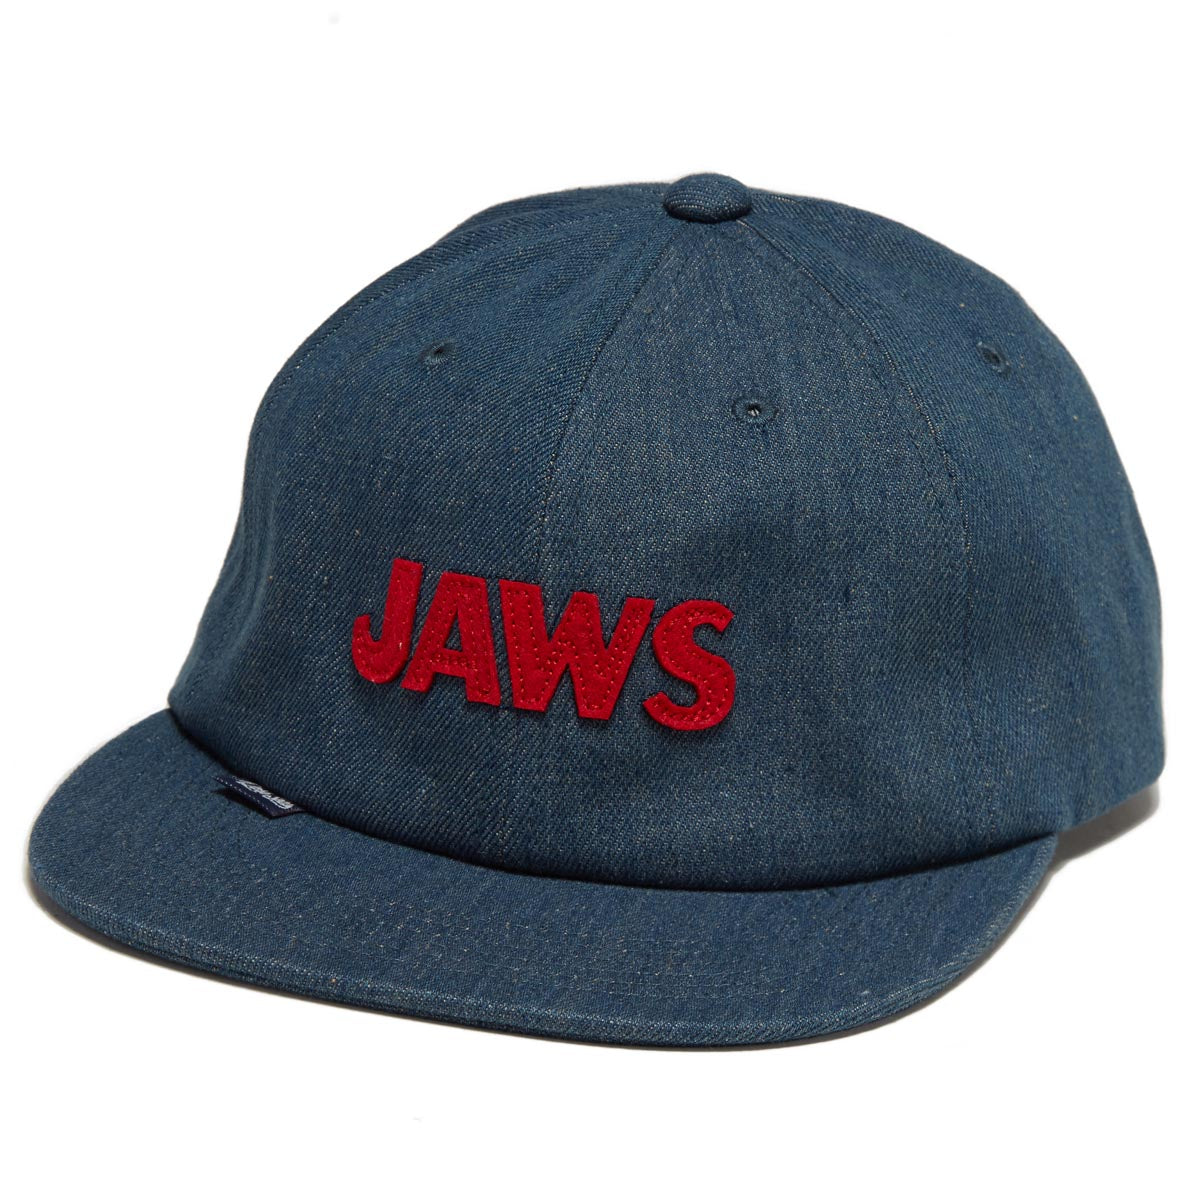 Dark Seas x Jaws Gary Hat - Indigo image 1